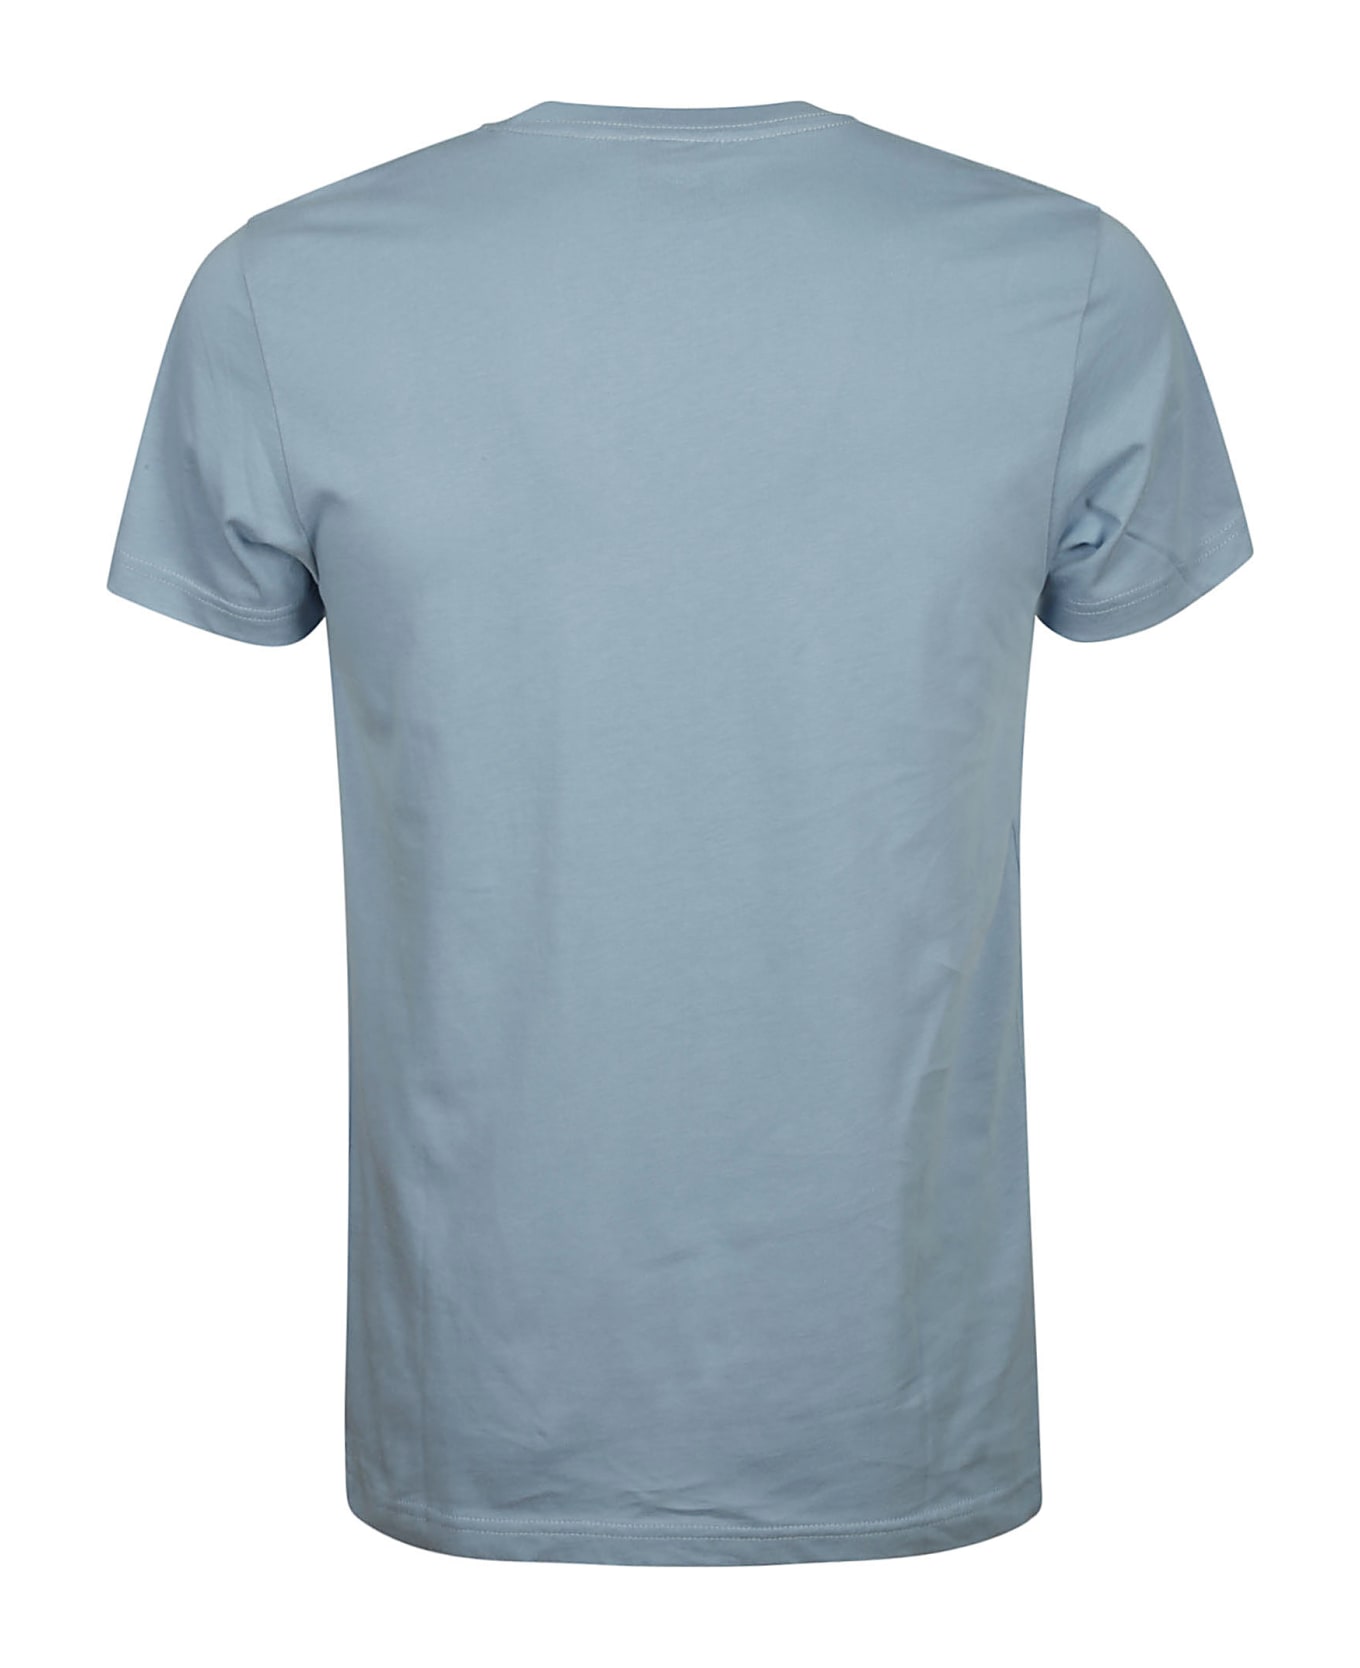 Paul Smith Slim Fit T-shirt B&w Zebra - D Light Blue